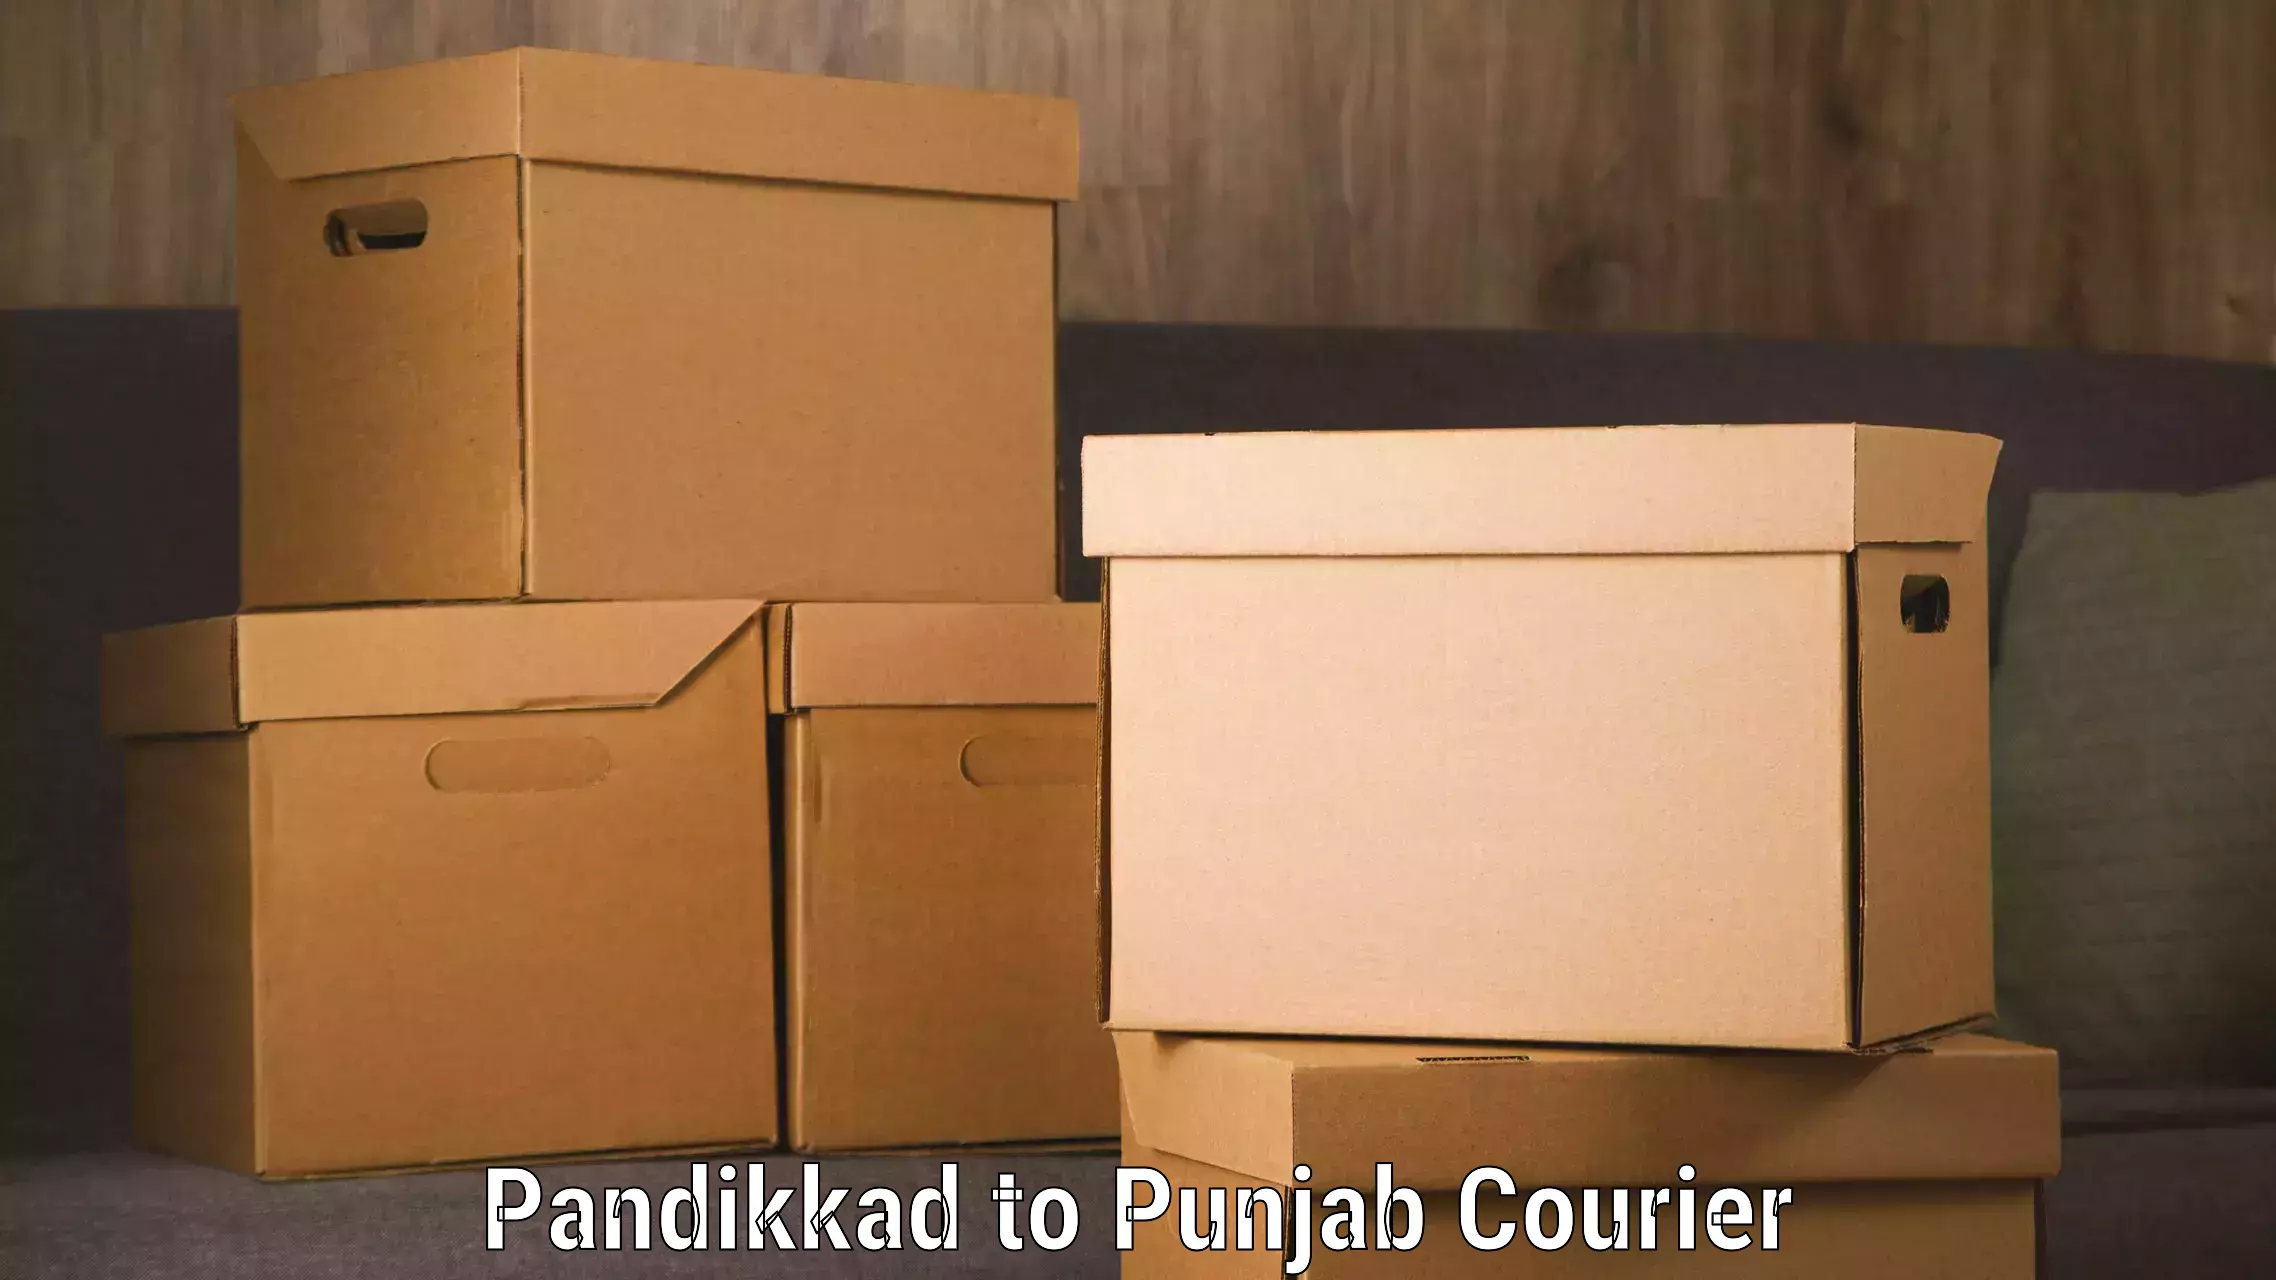 Efficient shipping platforms Pandikkad to Khanna